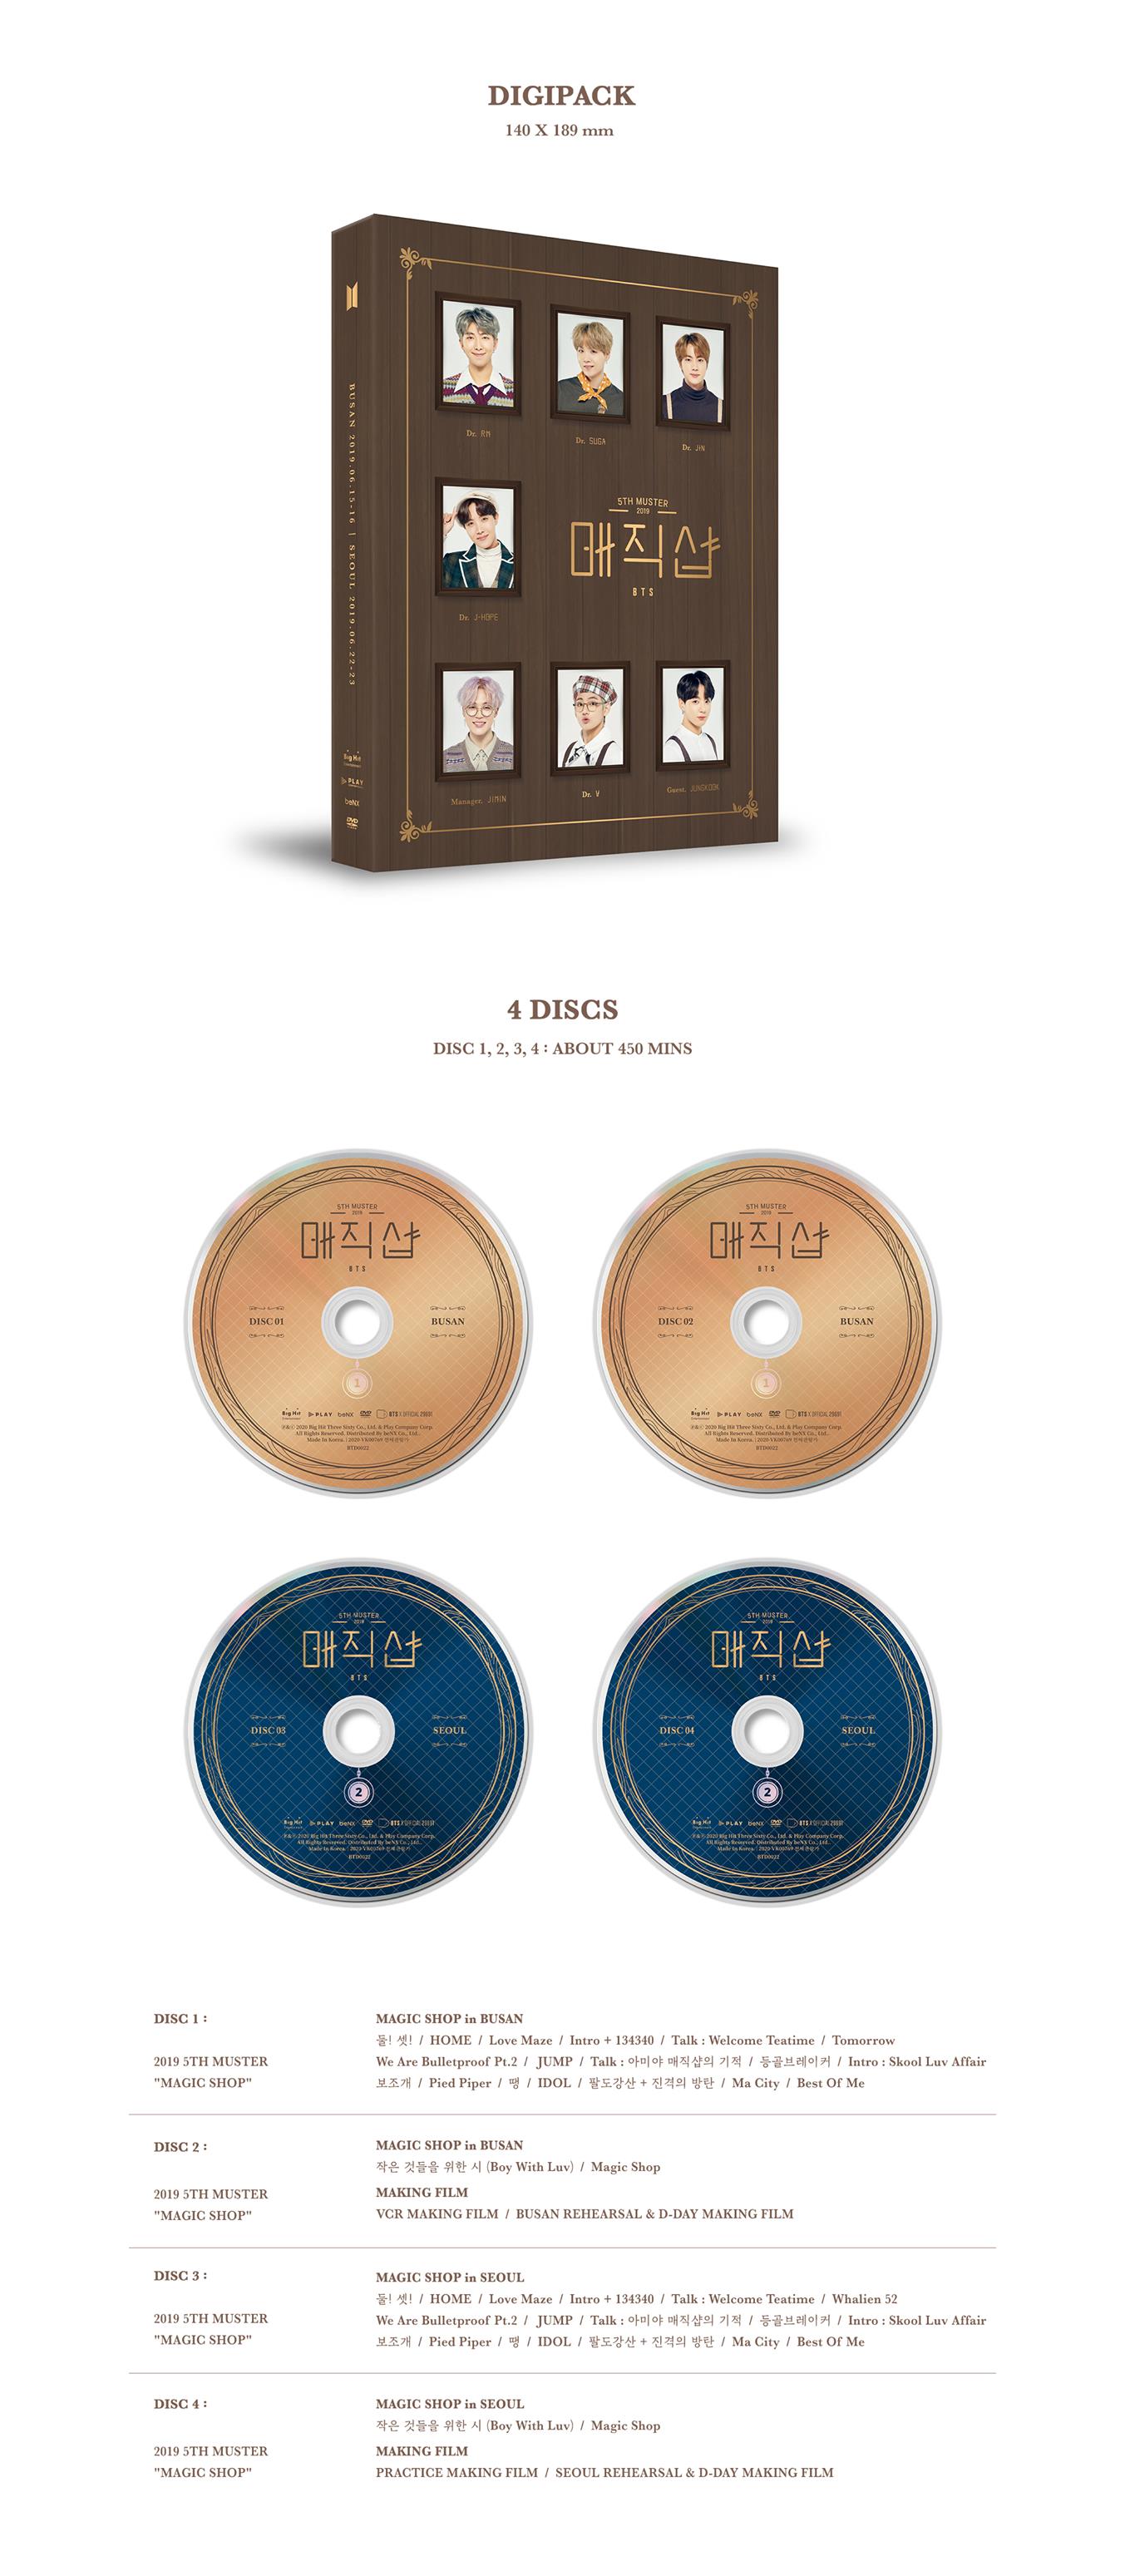 ktown4u.com : [DVD] BTS - BTS 5th MUSTER [MAGIC SHOP] DVD